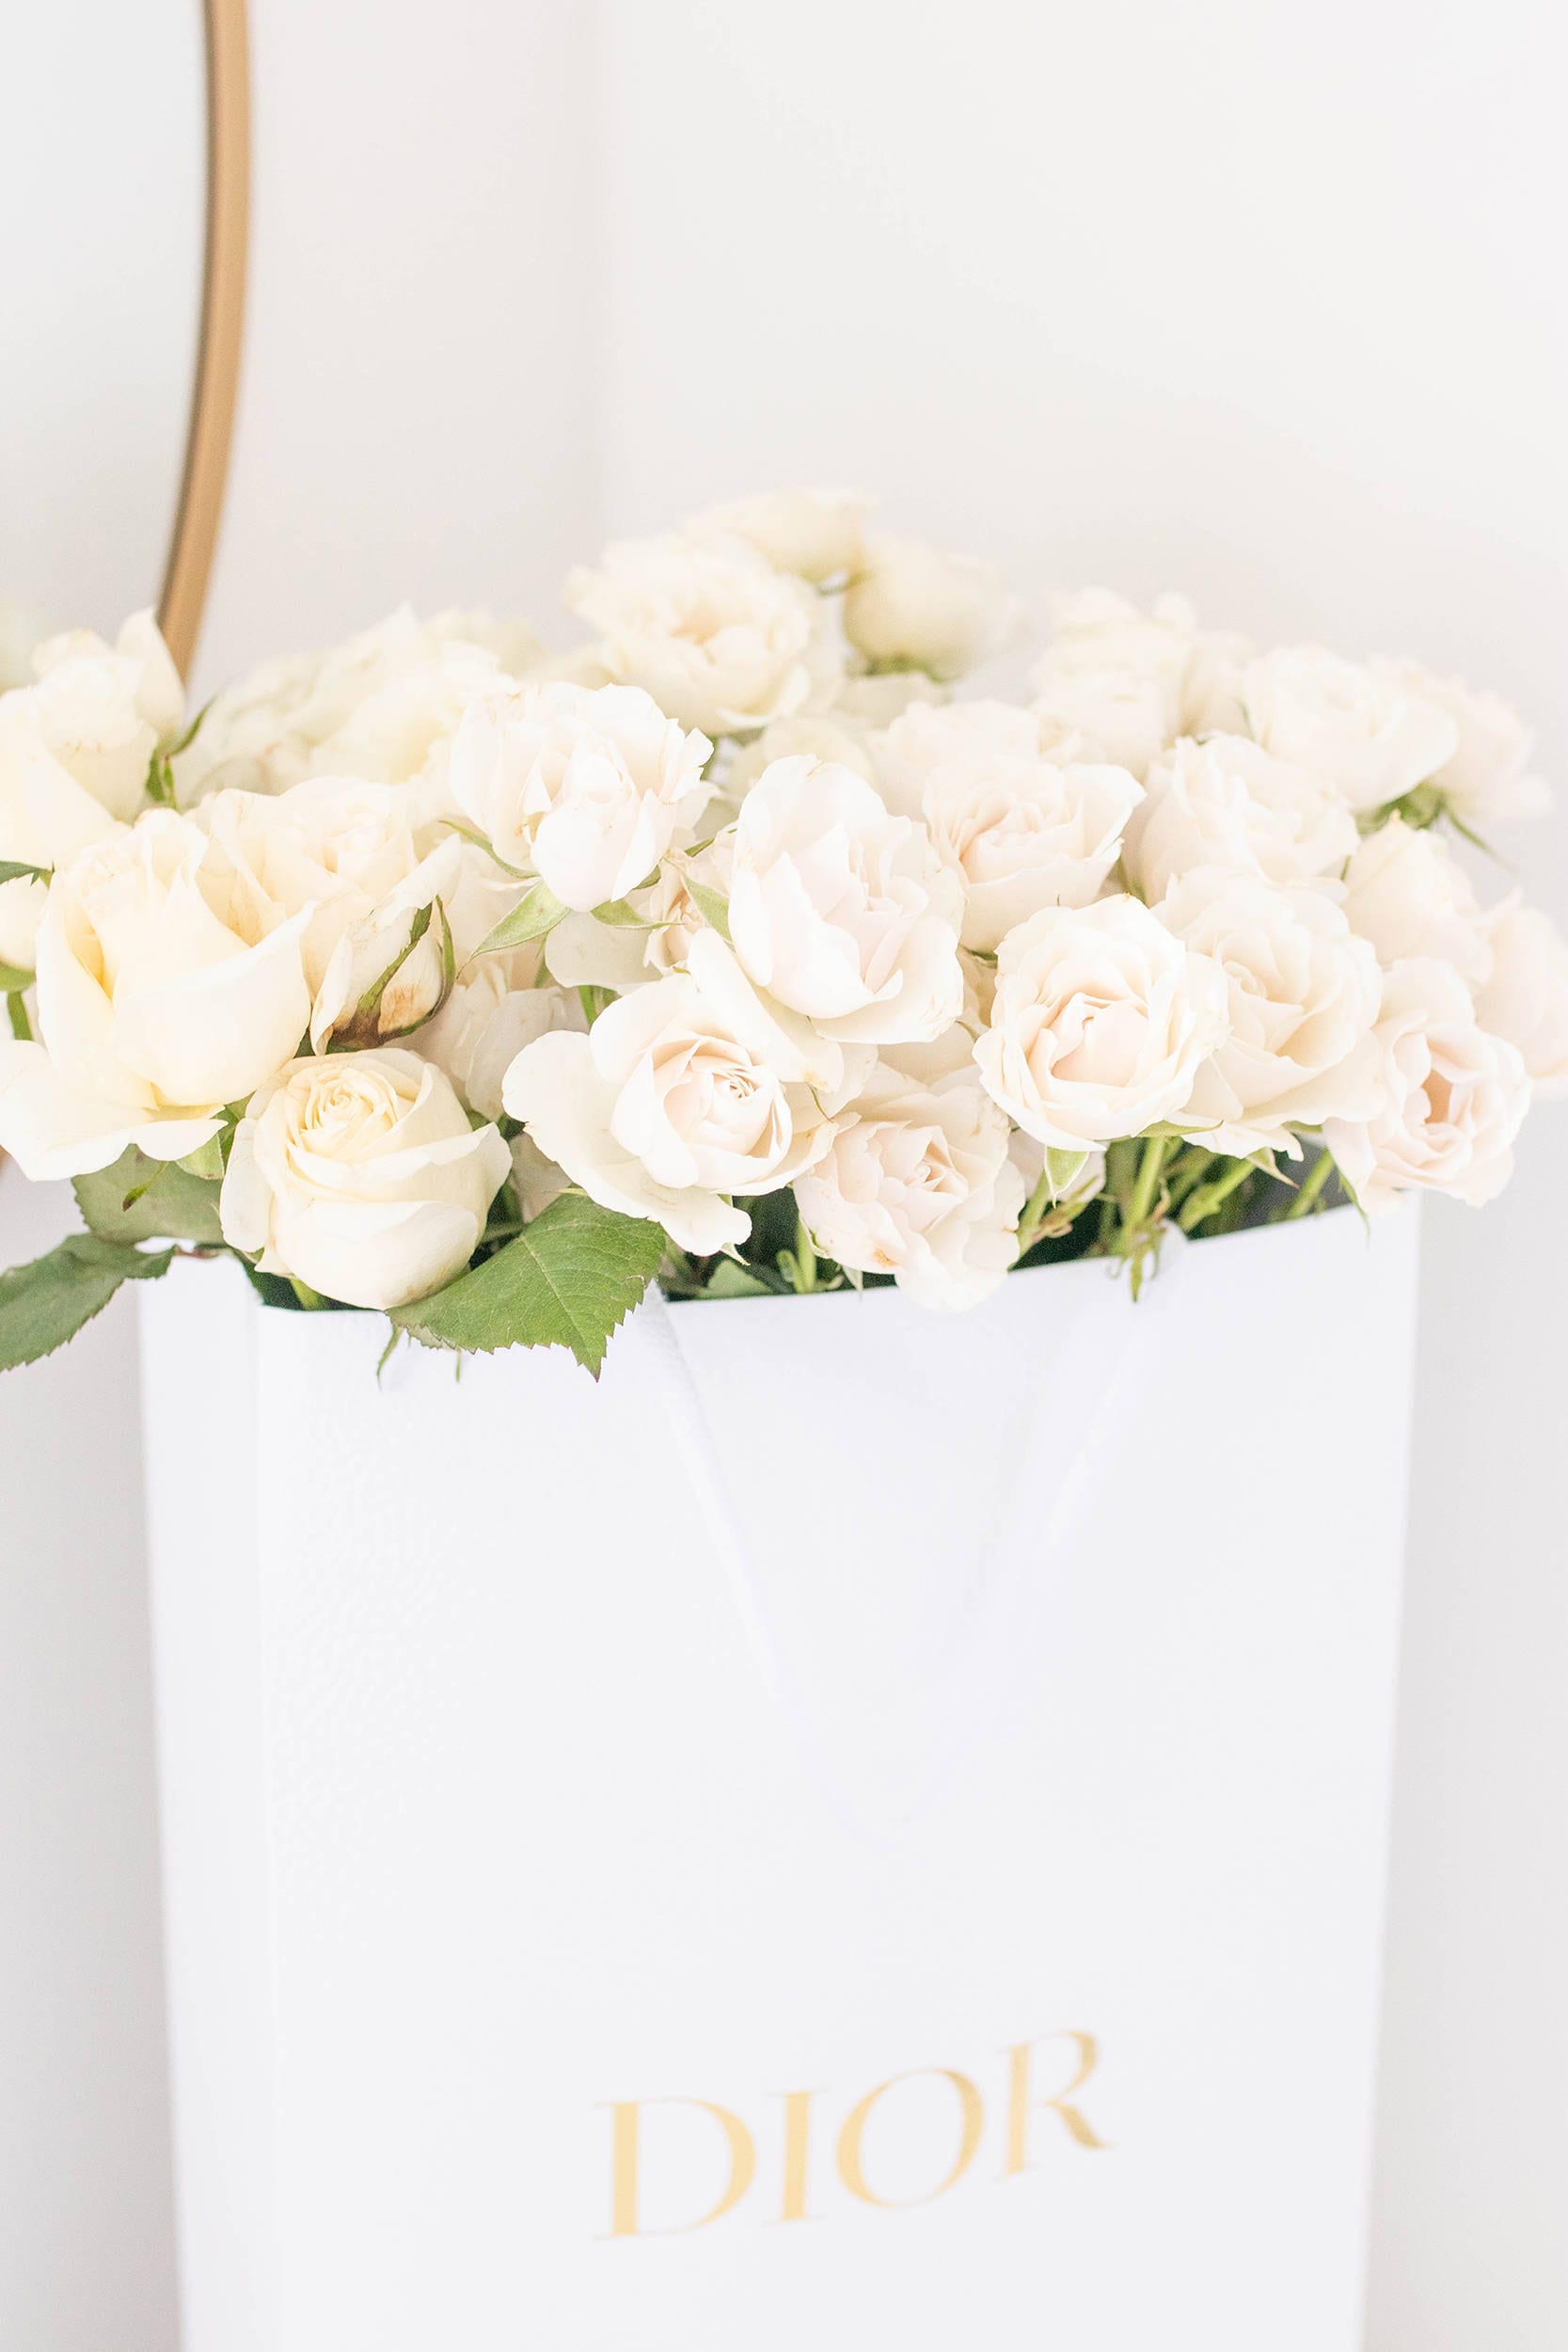 Designer Flower Arrangements, Flowers in Shopping Bags, Dior Floral, Dior Flowers